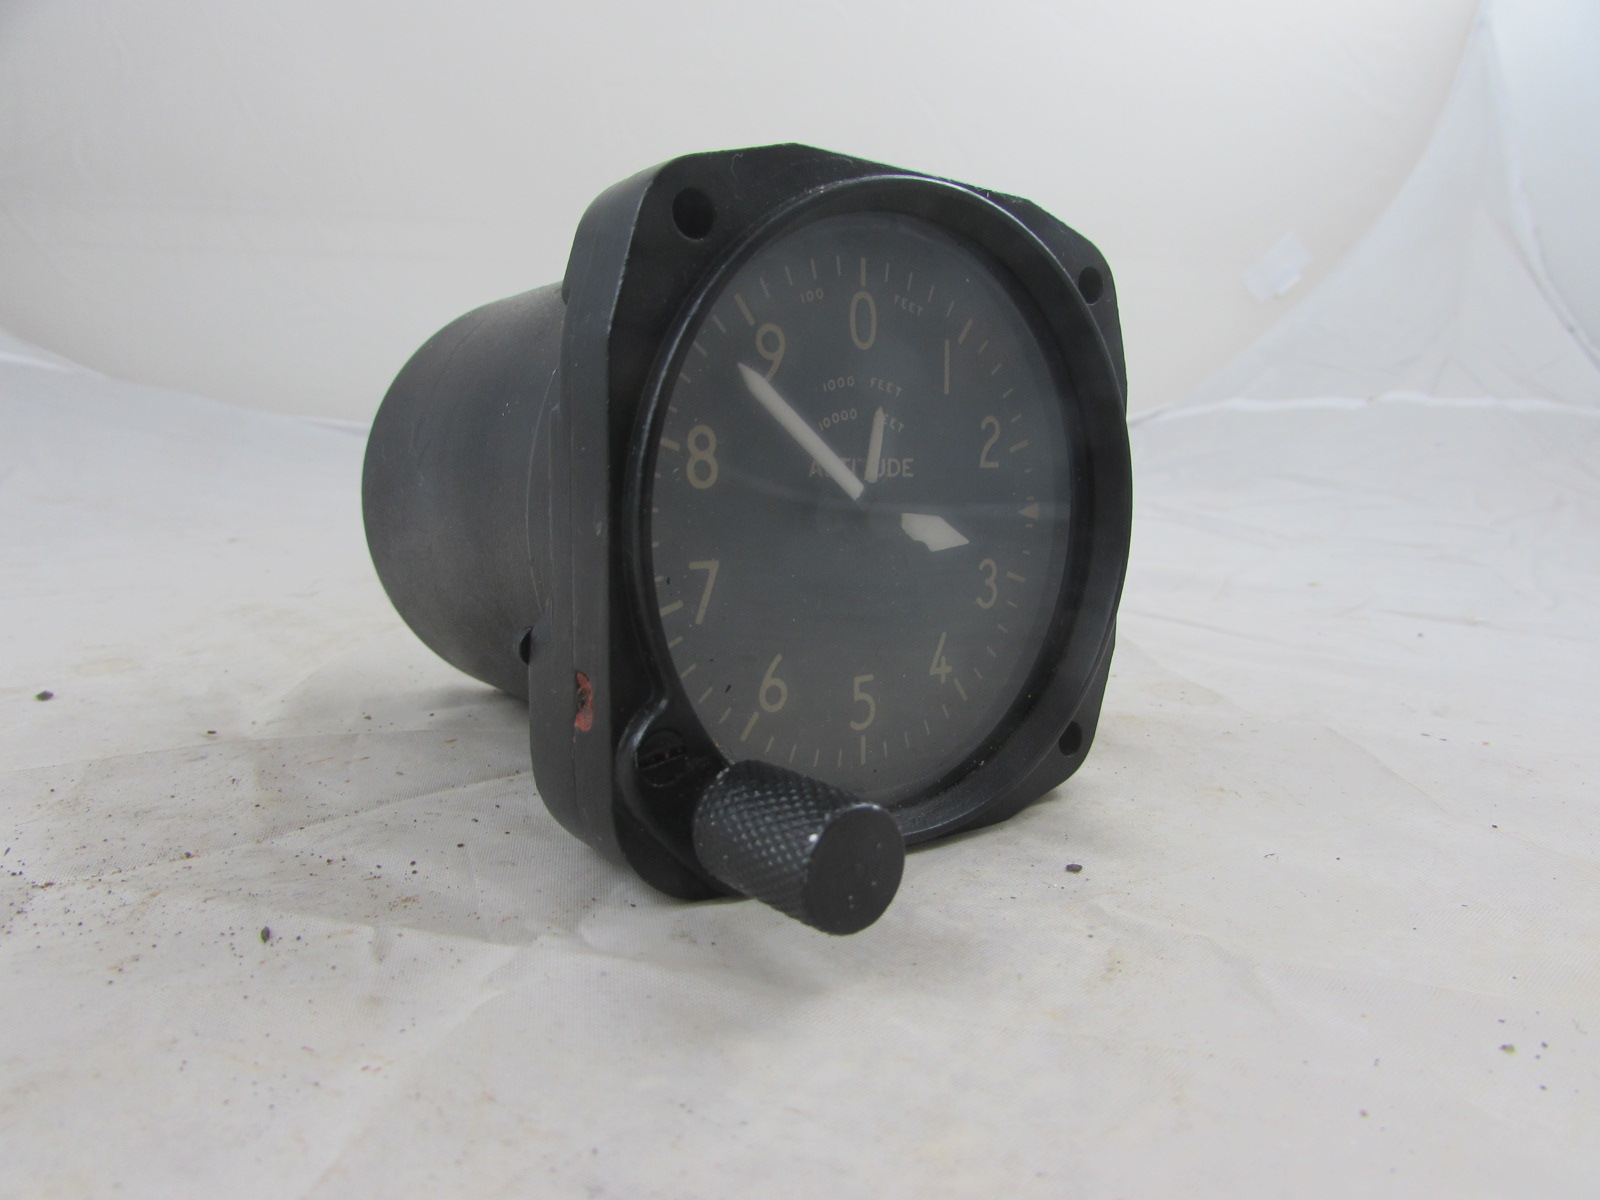 Altimeter, Pressure Clock,U.S. Property